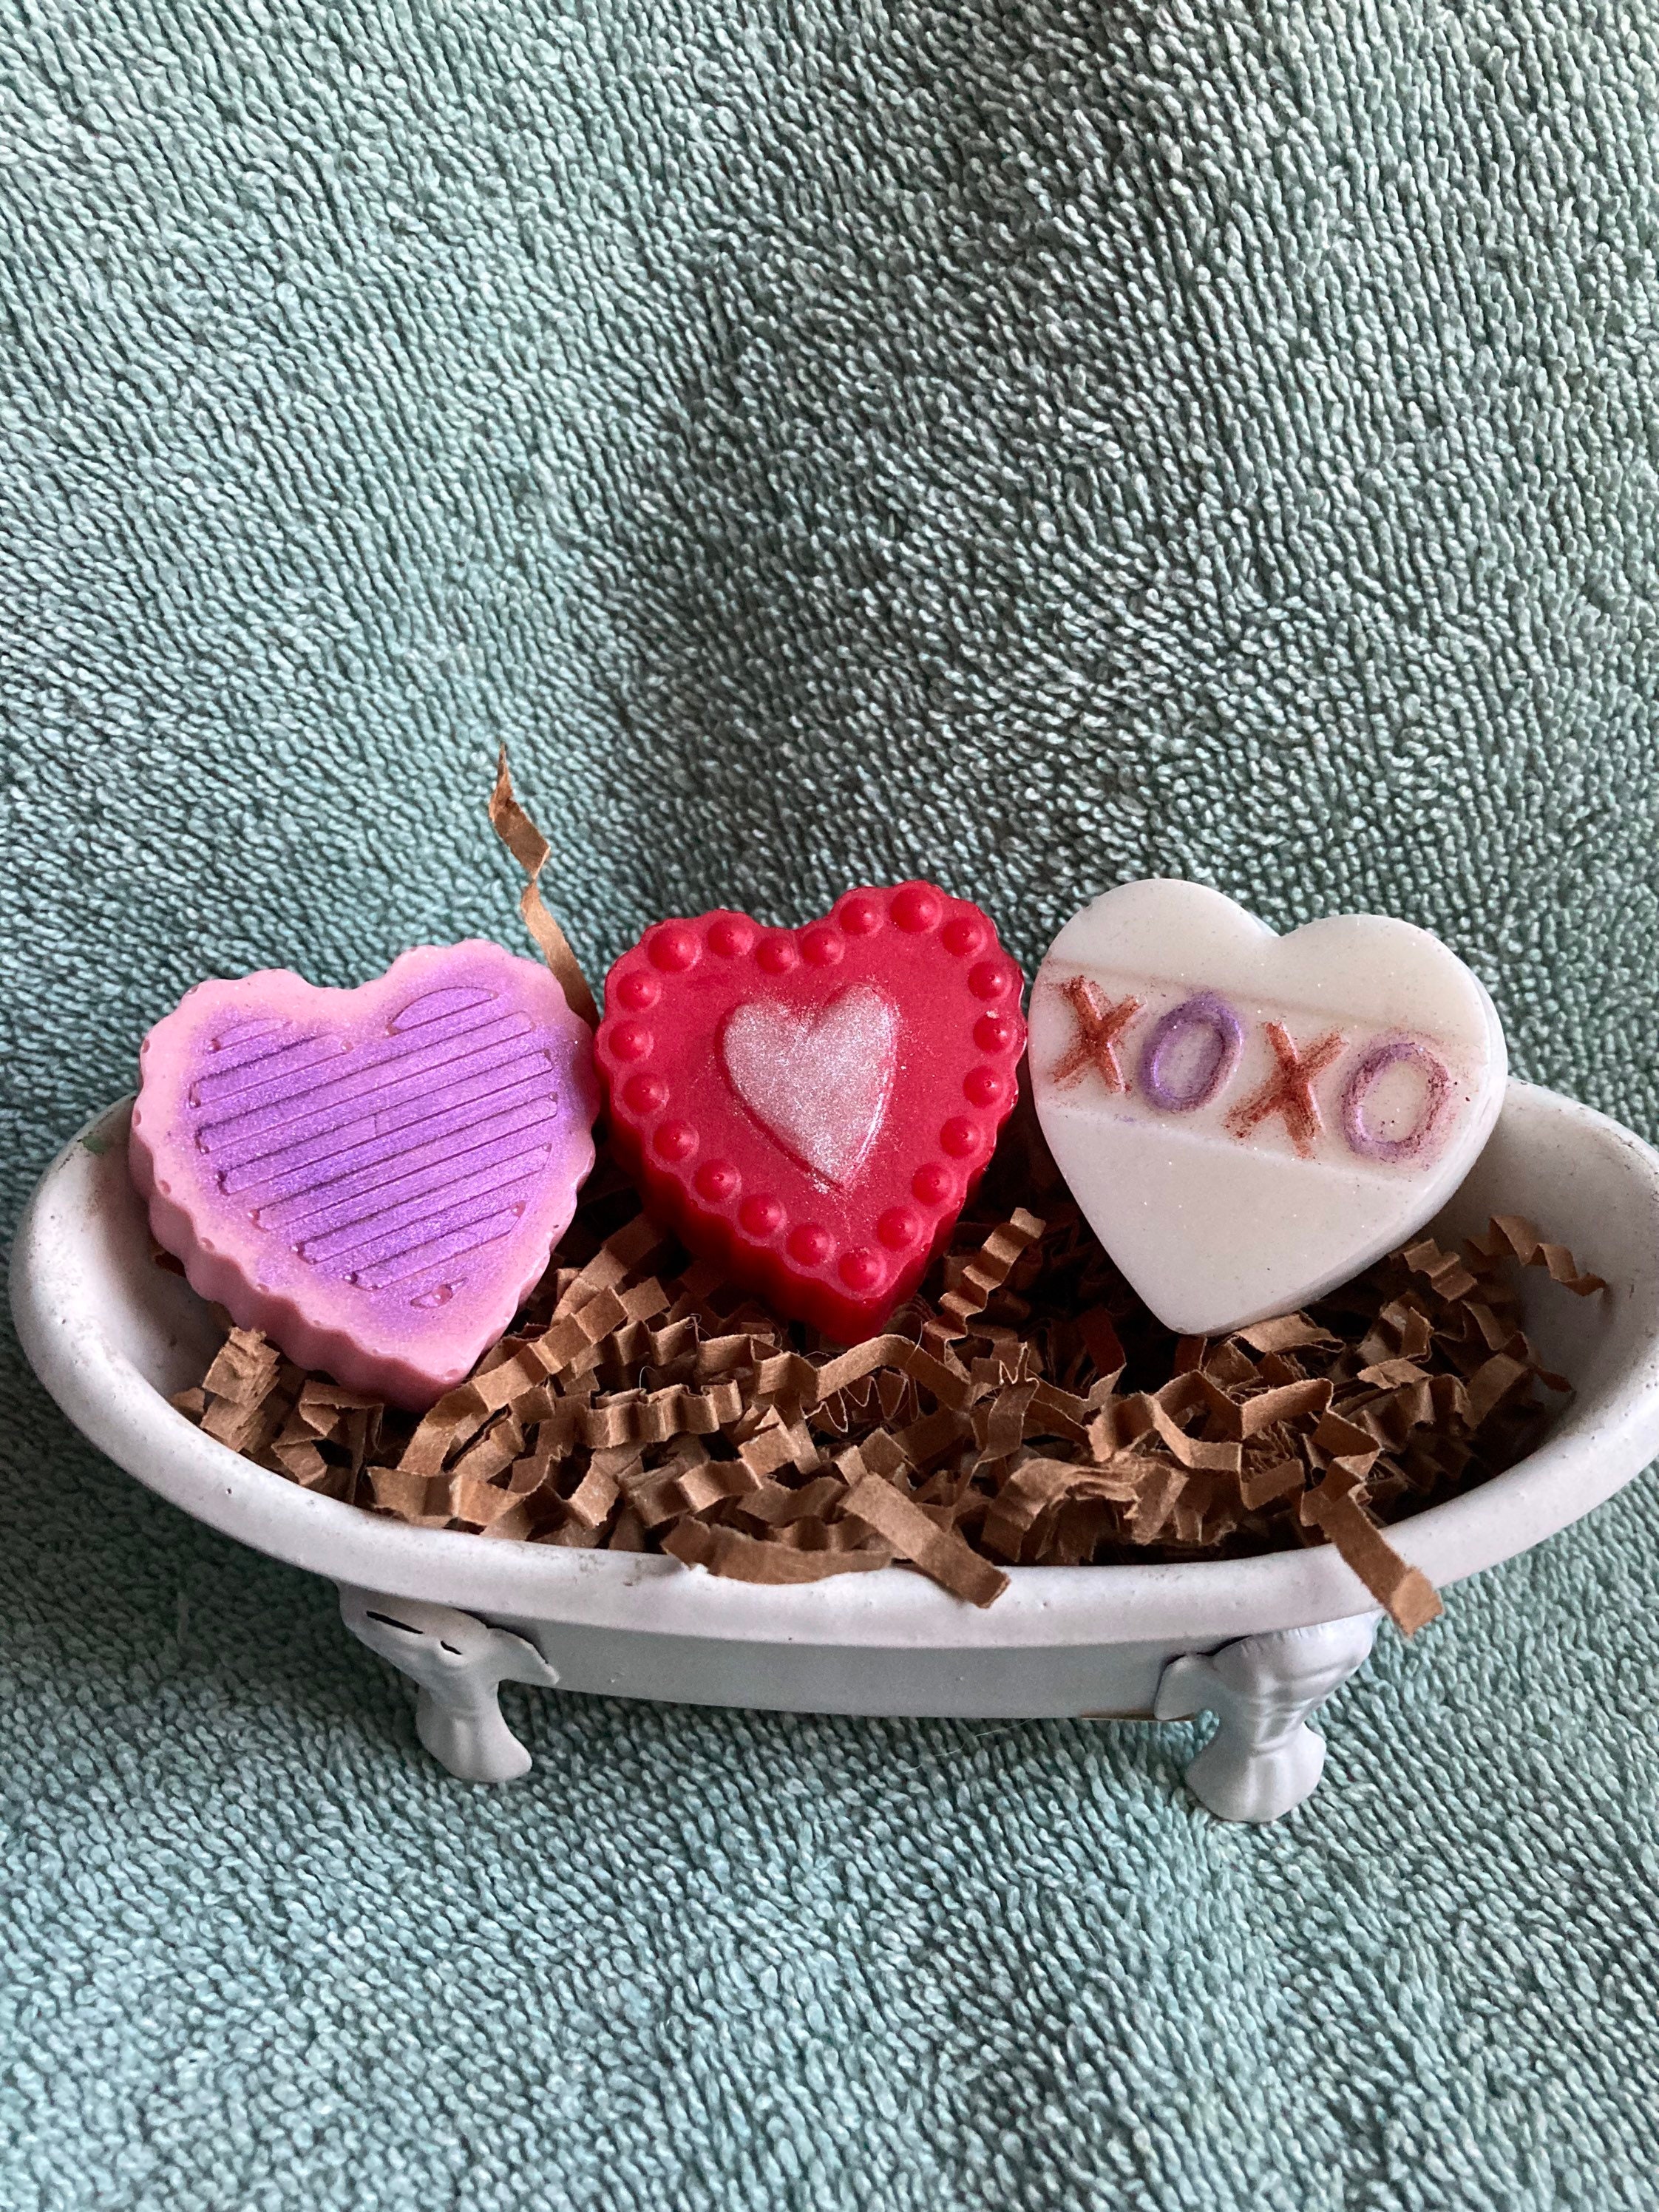 Valentines Day Soap Mini Heart Soaps - Hearts, Mini Hearts, Heart, Heart  Sayings, Bridal Shower, Wedding Favor, Kids Soaps, Mini Soaps